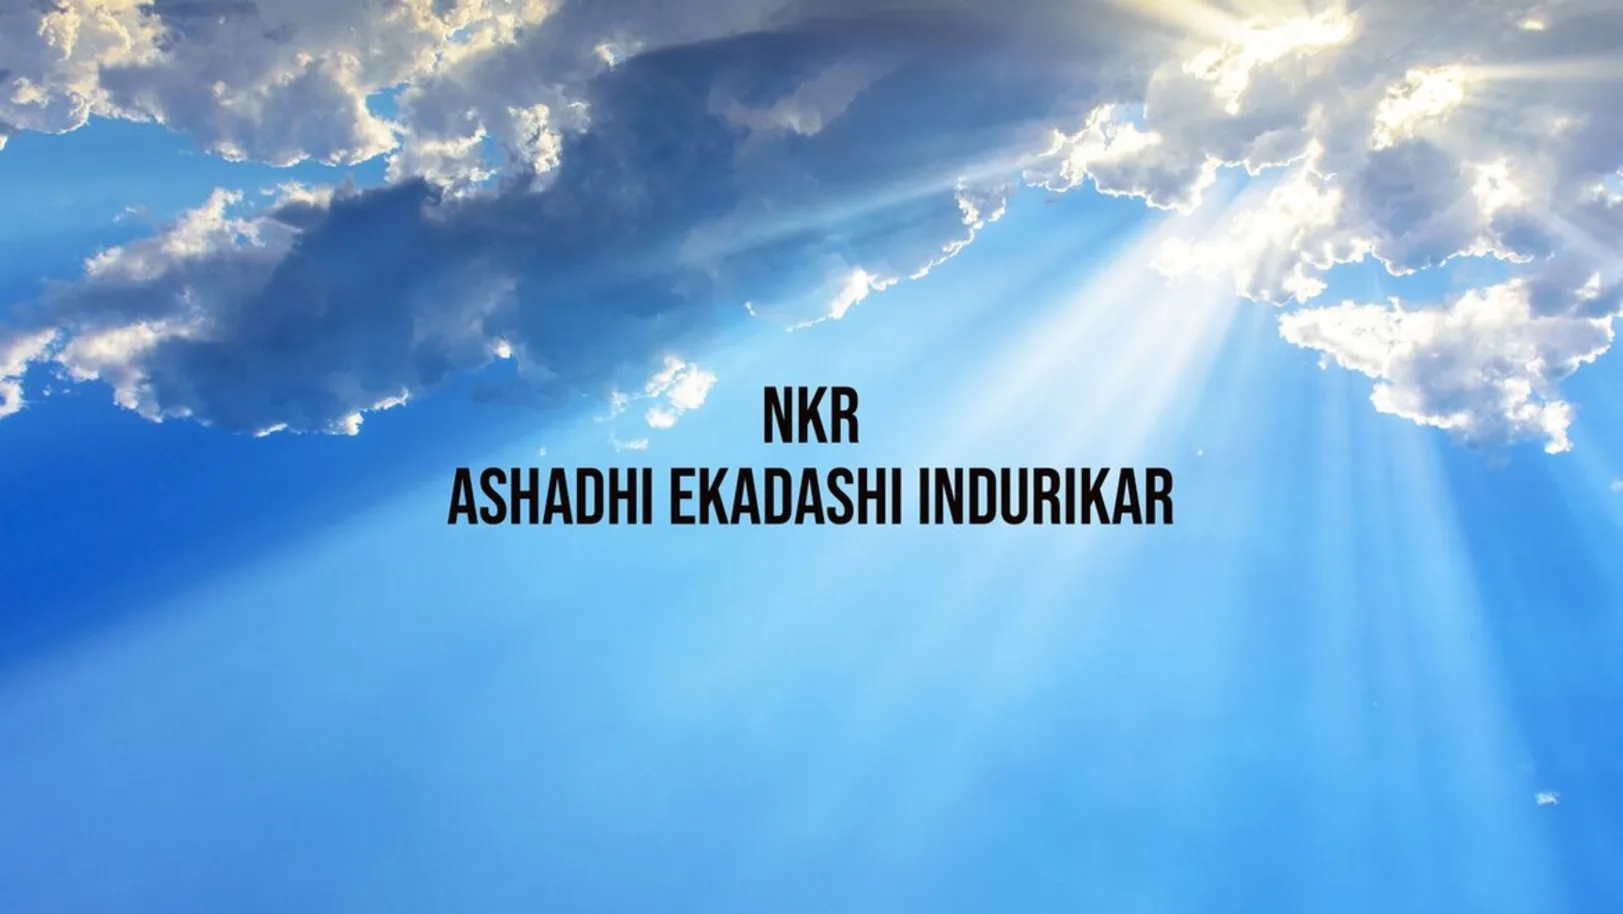 NKR Ashadhi Ekadashi Indurikar Streaming Now On Zee Talkies HD